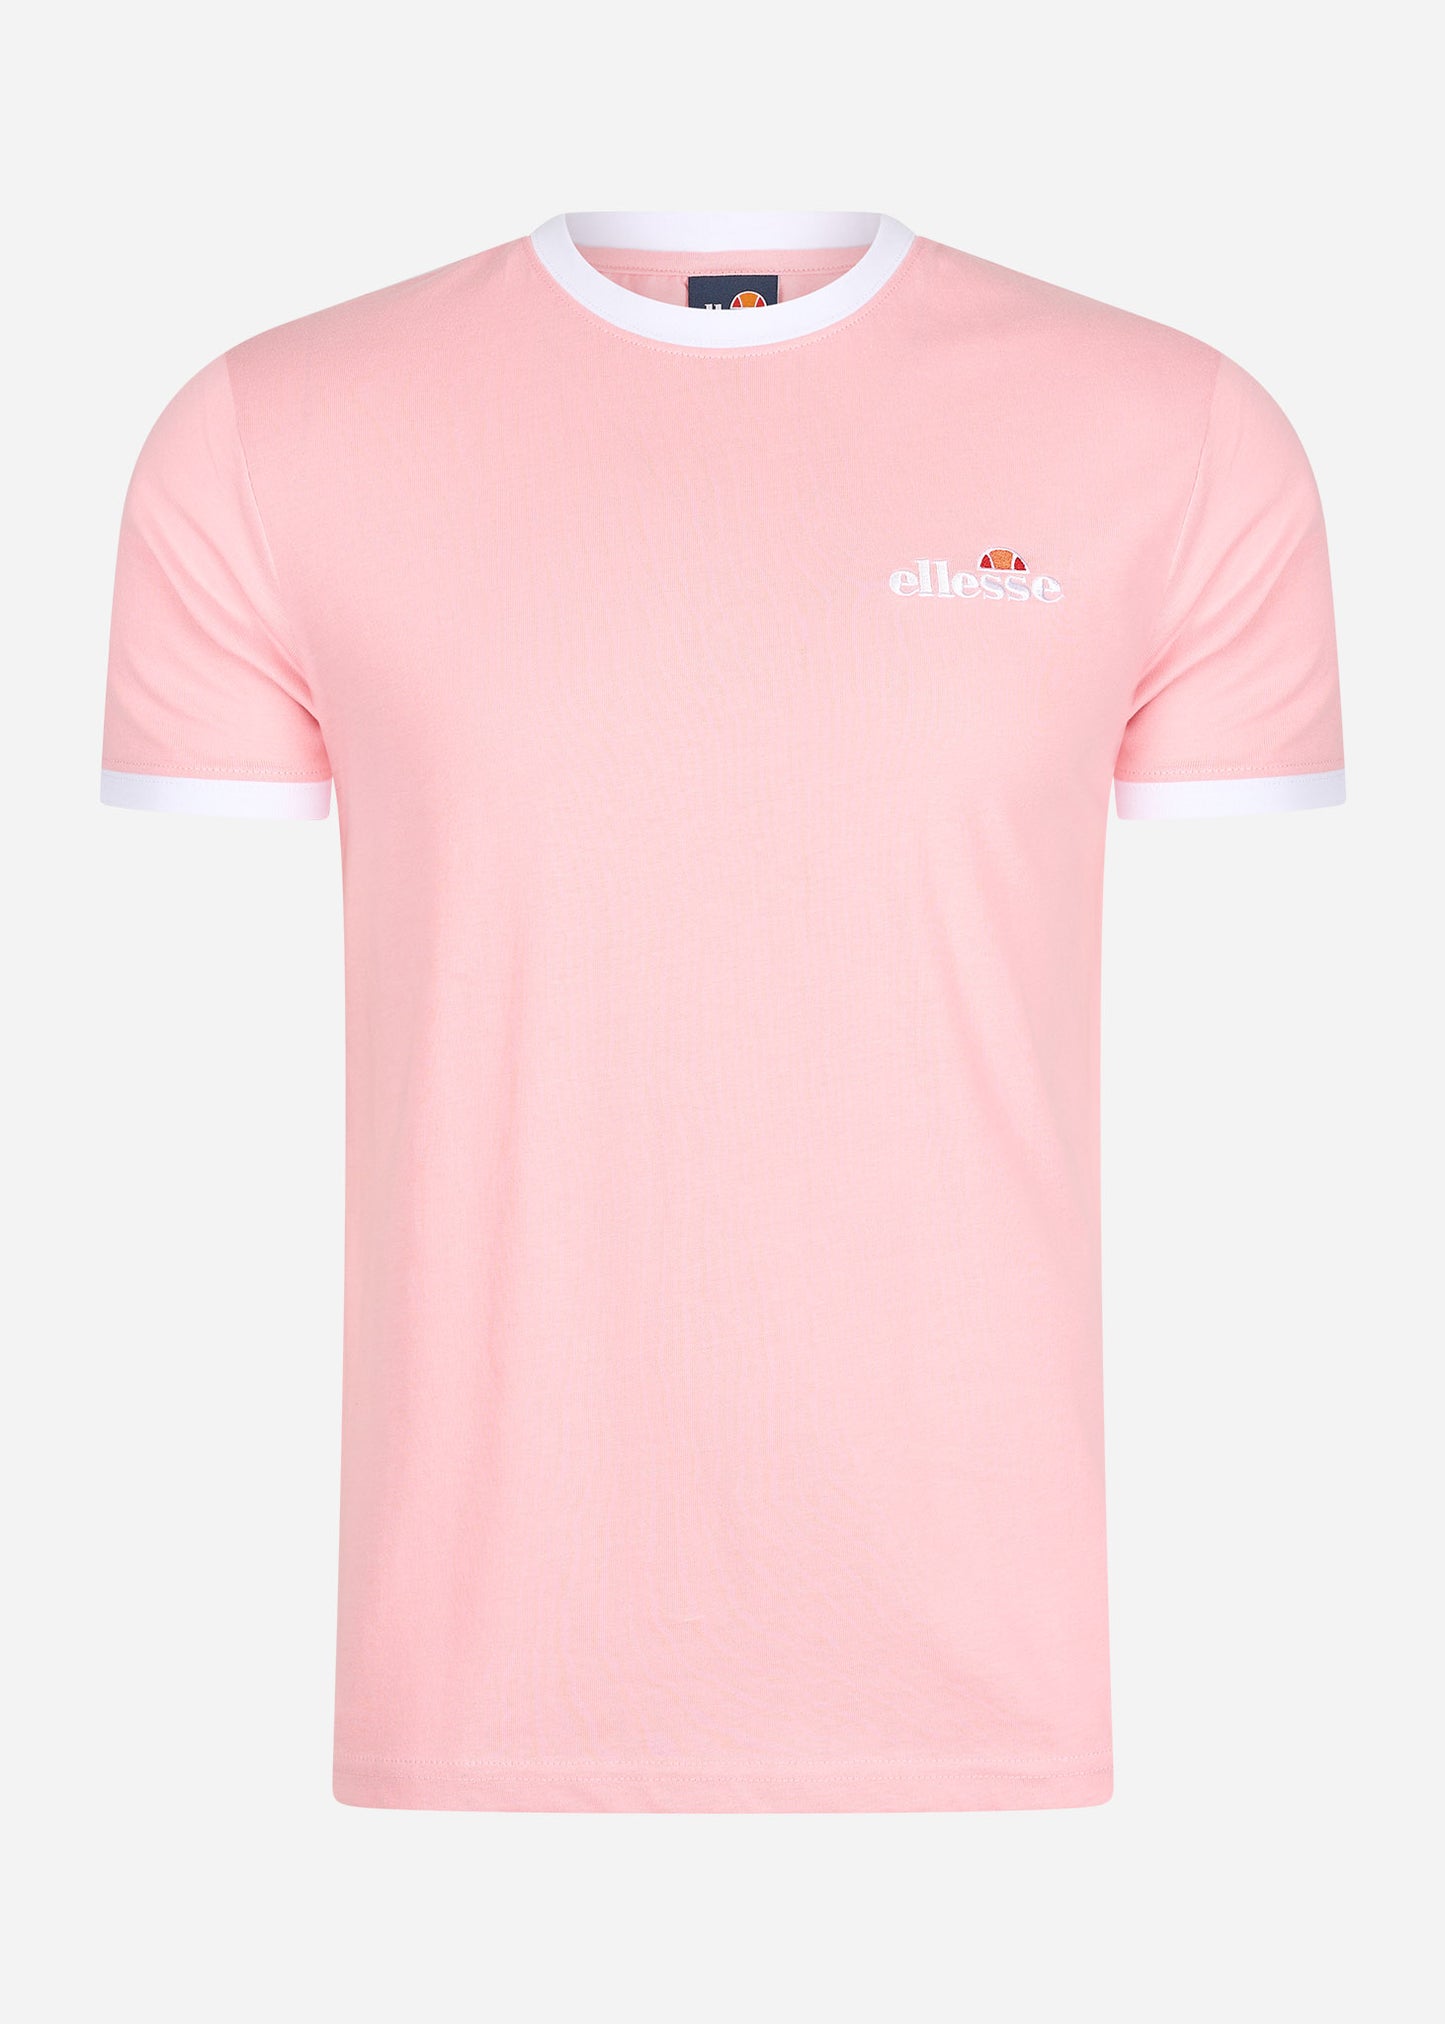 Meduno tee - light pink